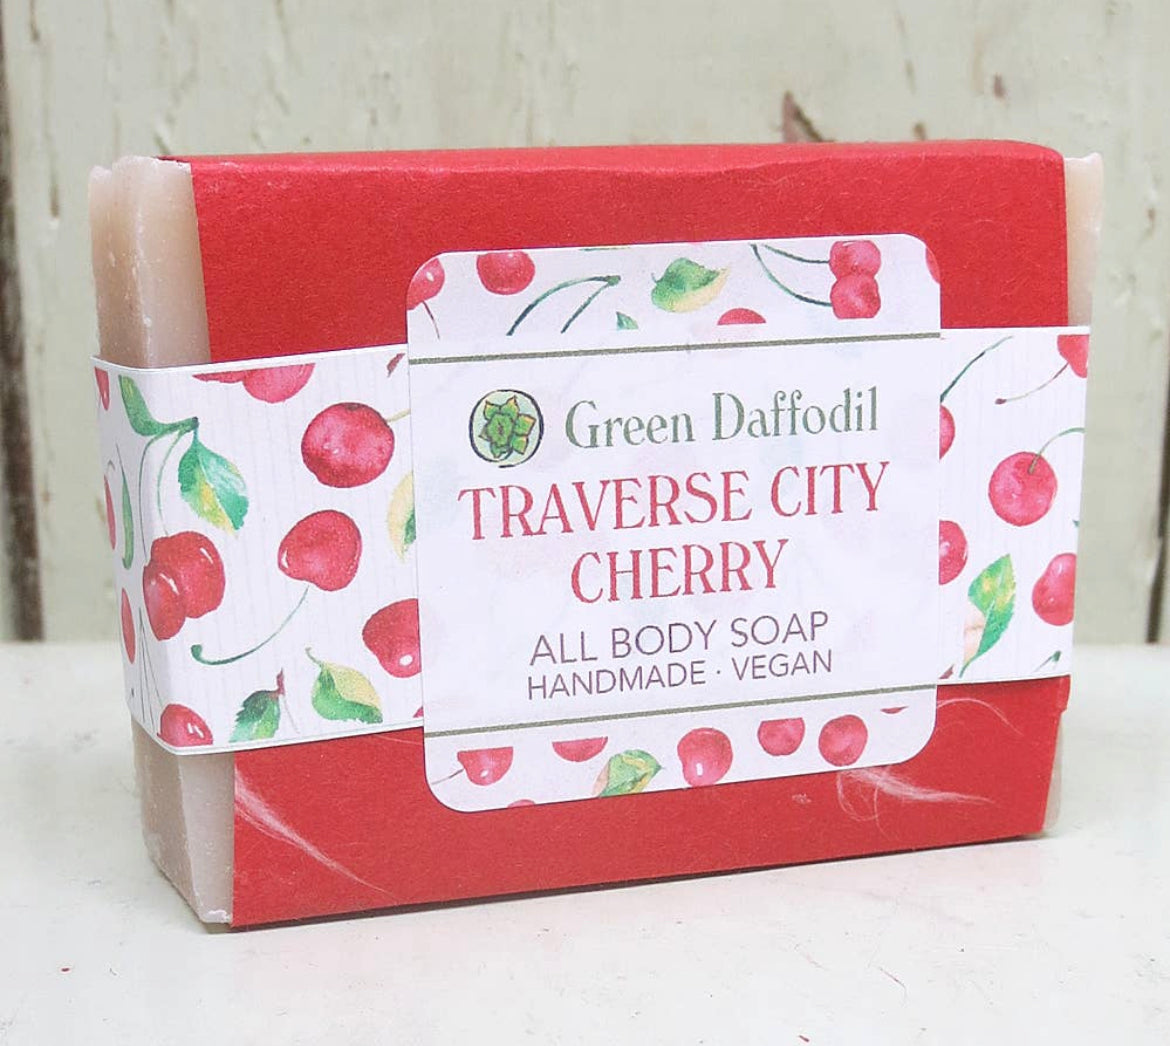 Traverse City Cherry Soap